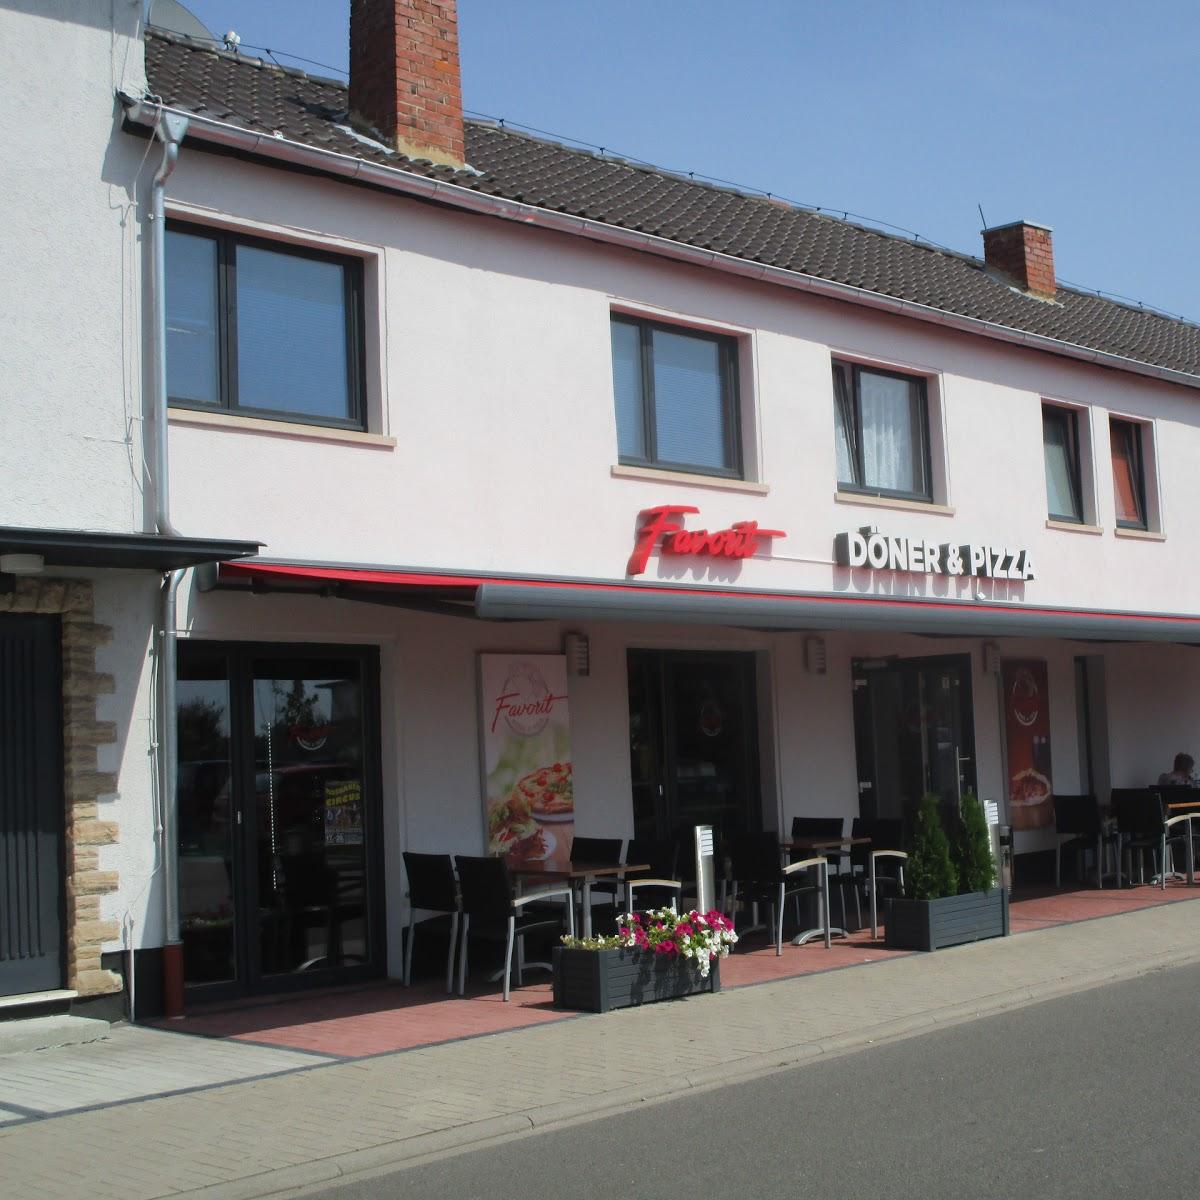 Restaurant "Favorit Döner & Pizza" in  Haßloch